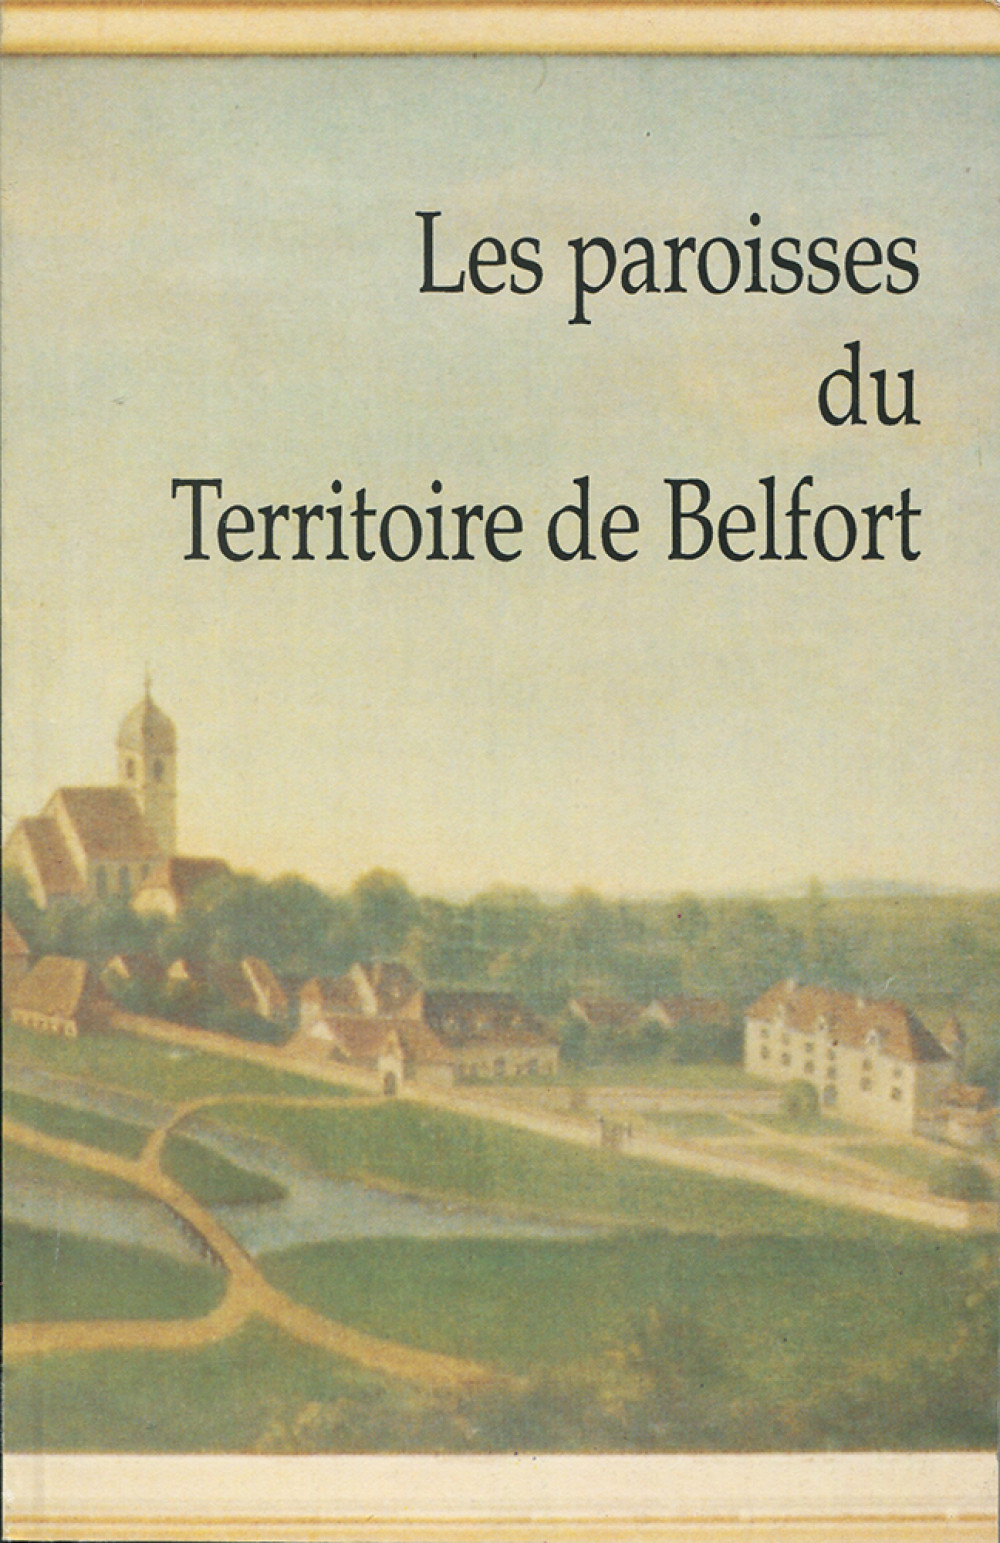 Les paroisses du Territoire de Belfort